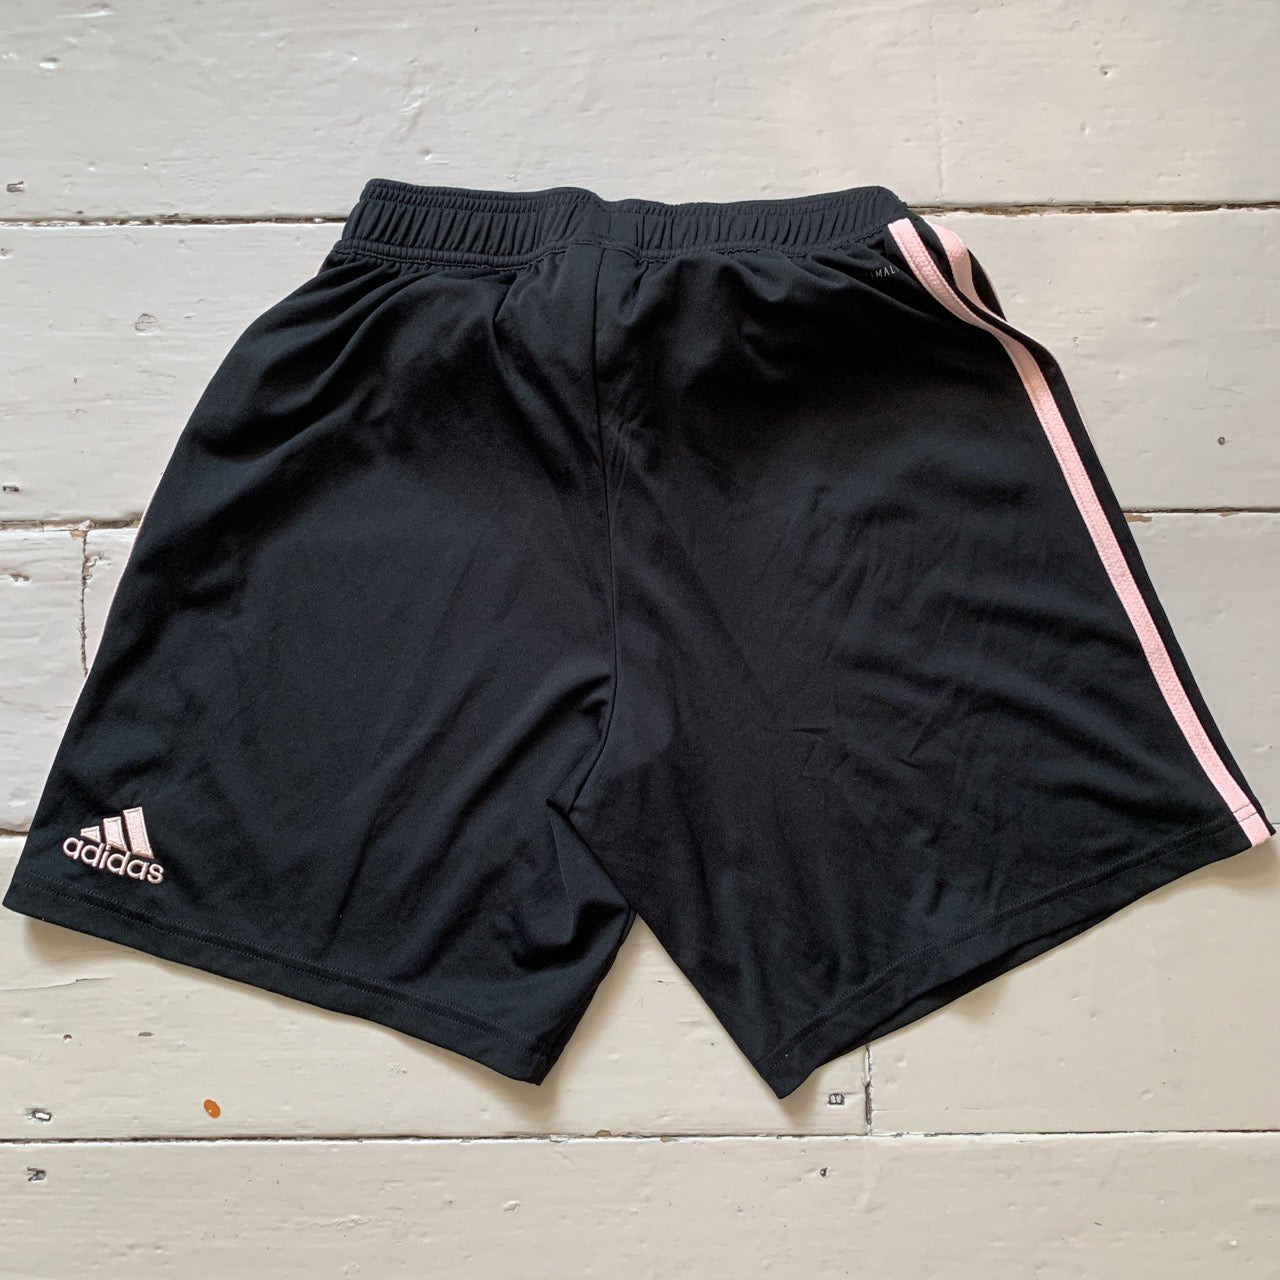 Adidas Manchester United Pink and Black Shorts (Small)